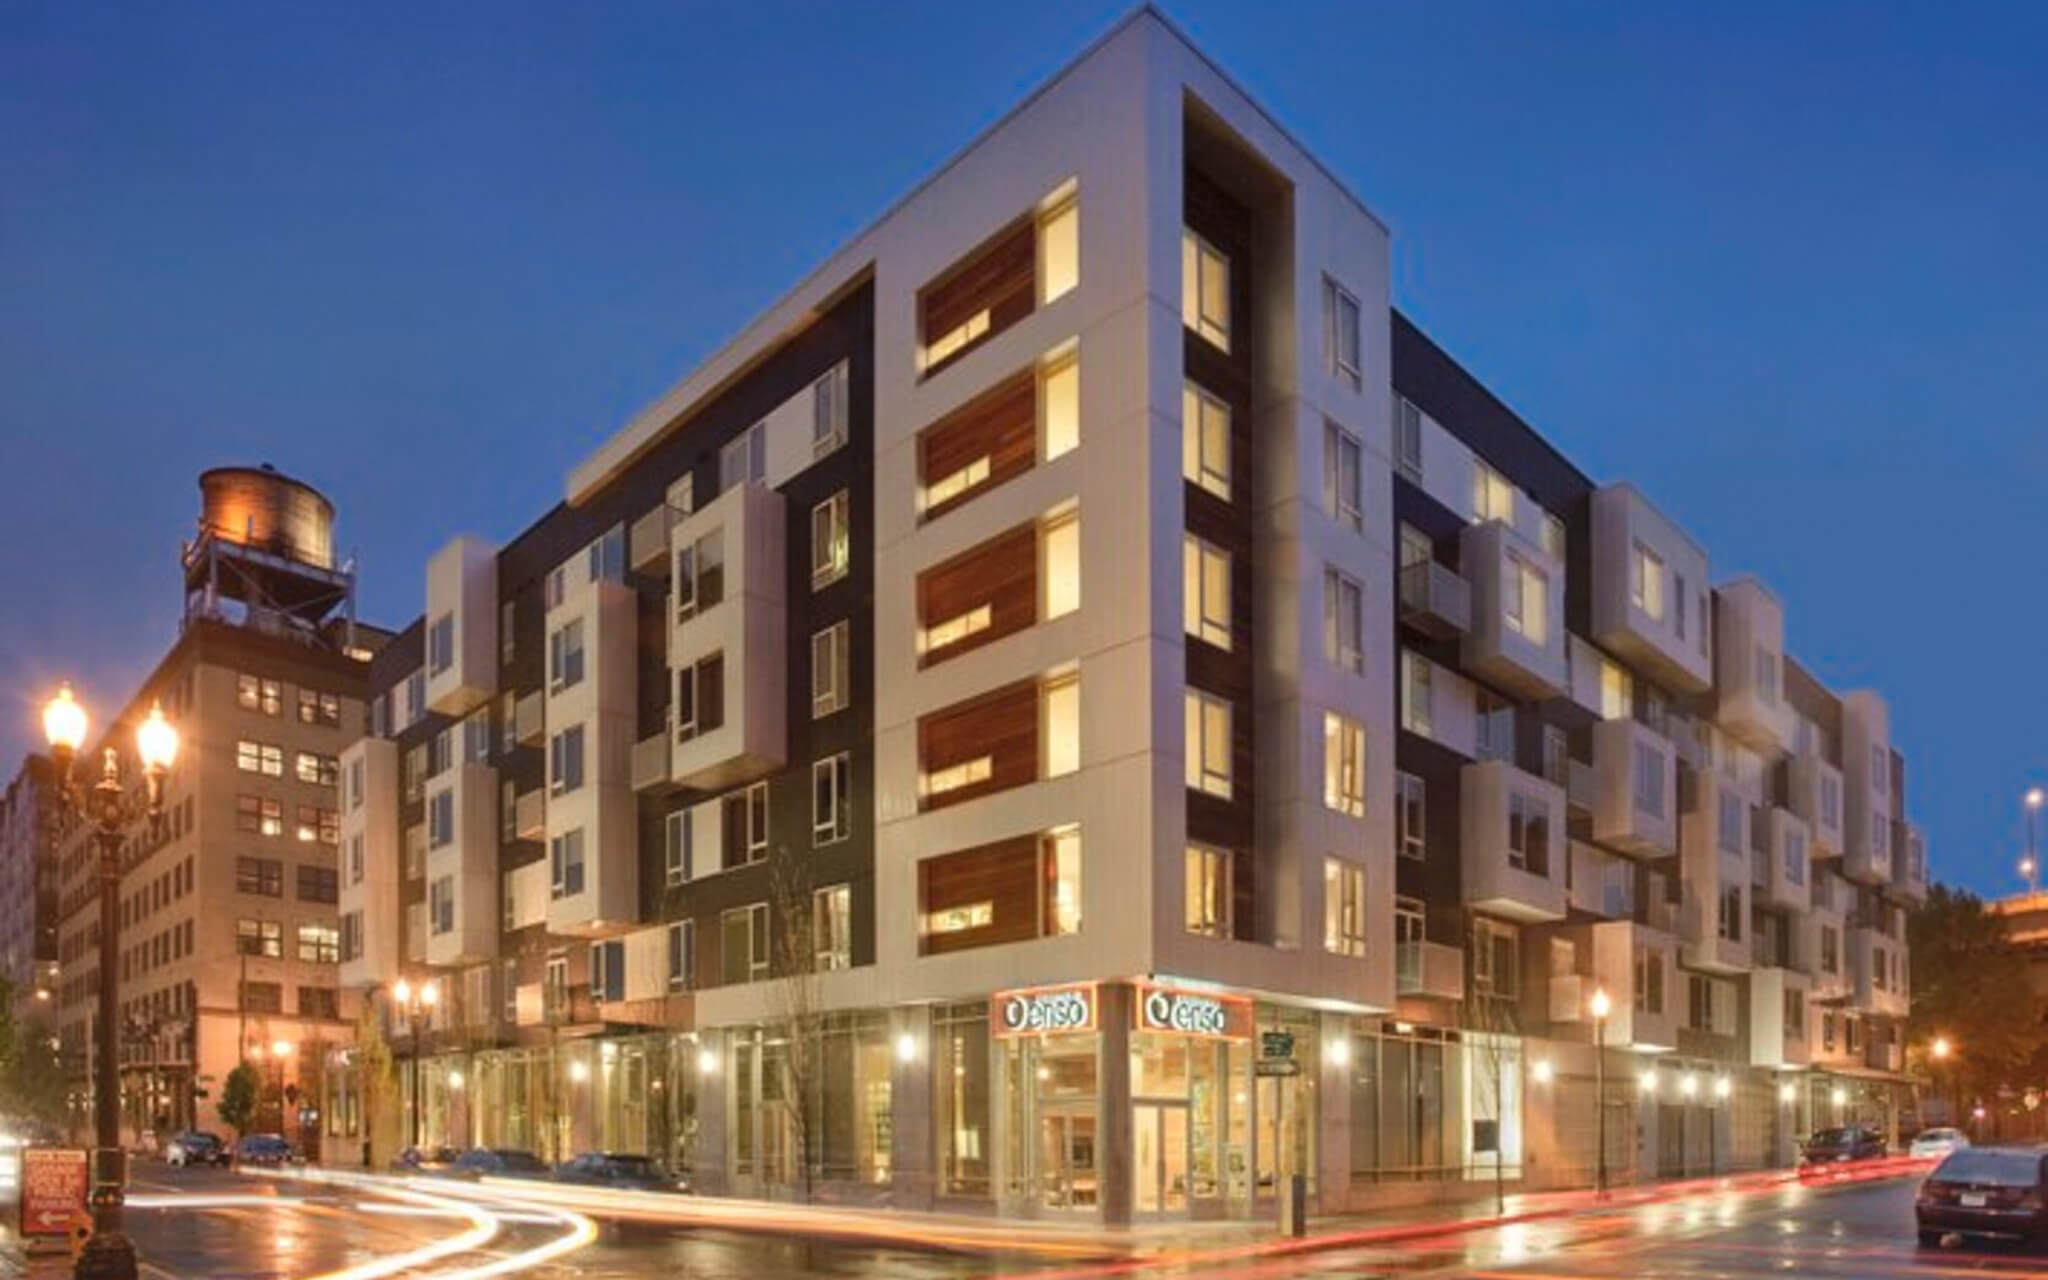 Paragon Corporate Housing - Enso Apartments - Downtown Portland Oregon